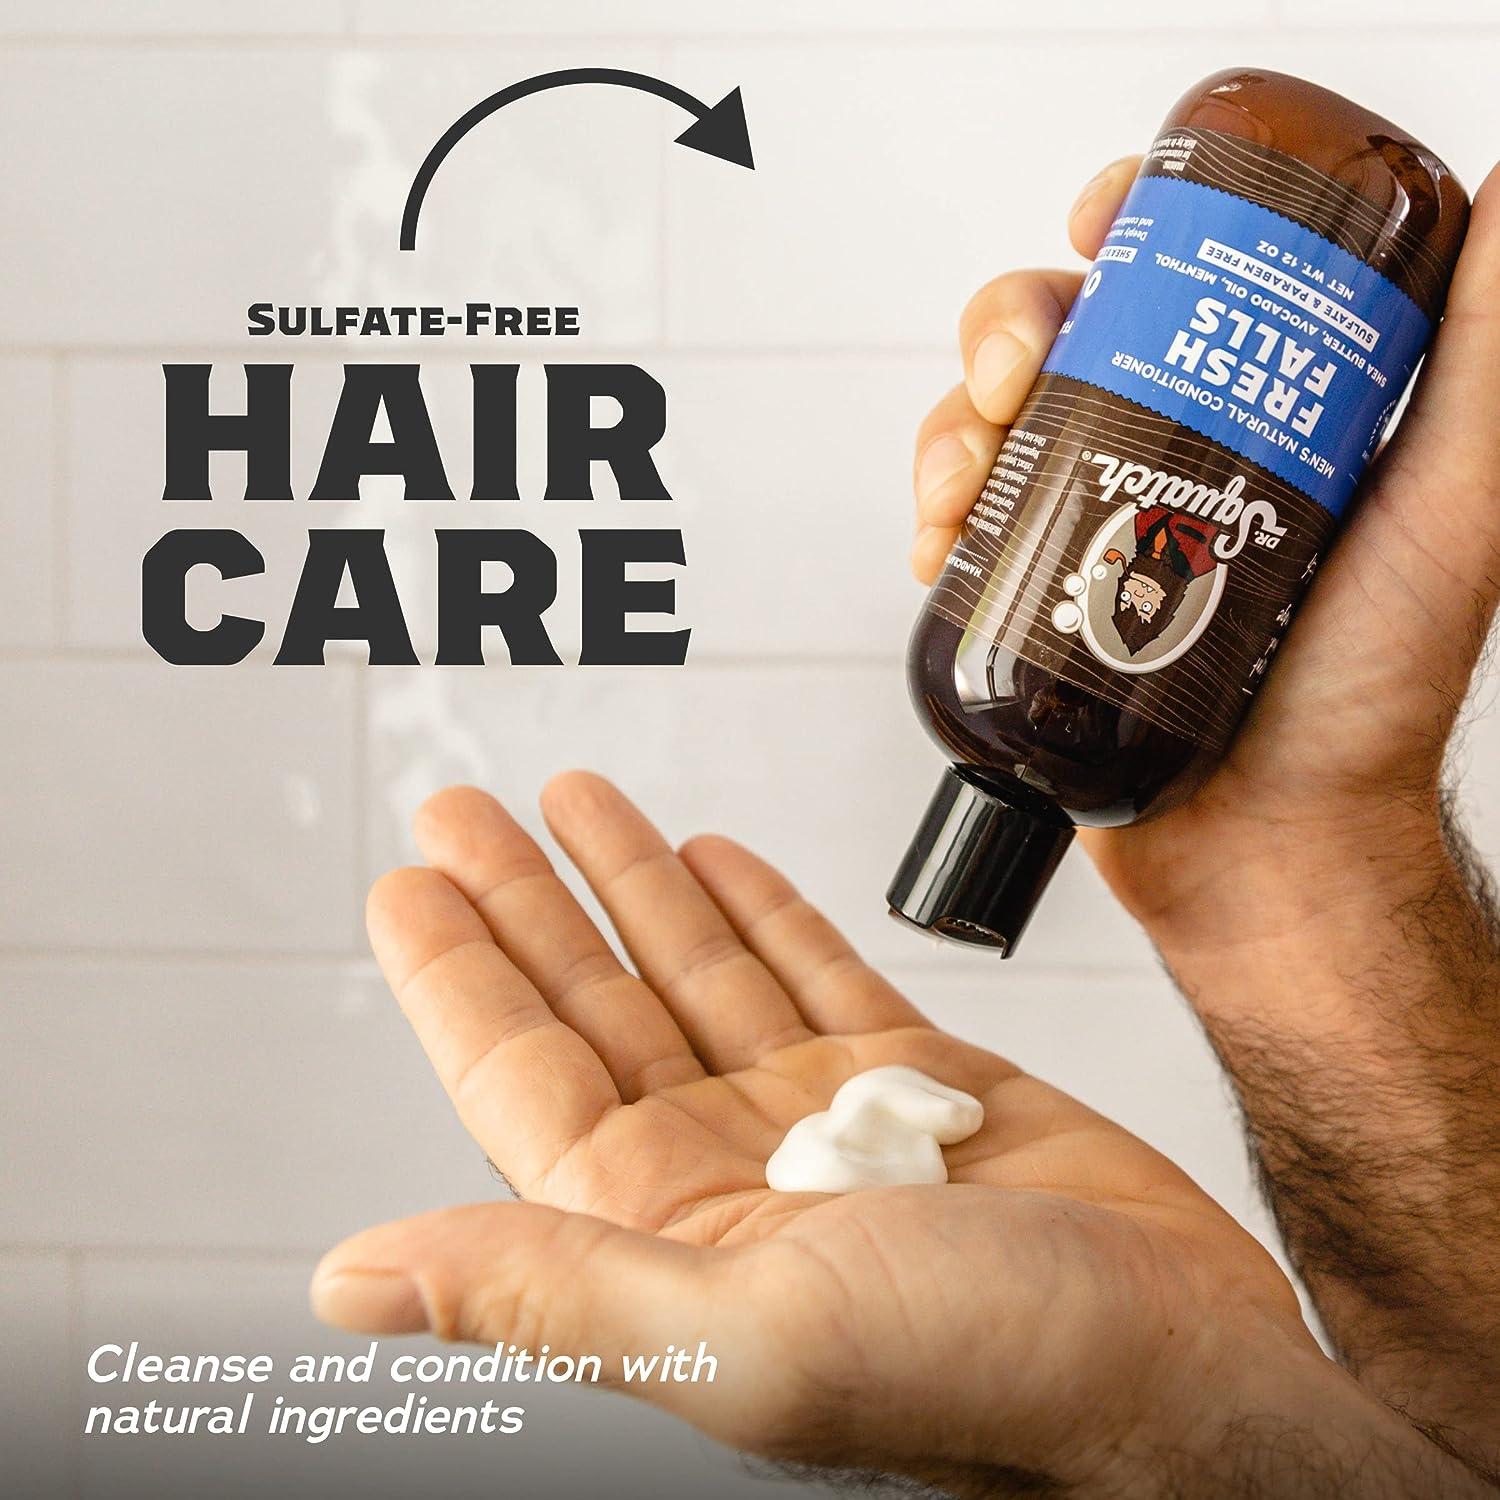 Dr. Squatch Men's Natural Shampoo for All Hair Types, Fresh Falls, 8 oz 